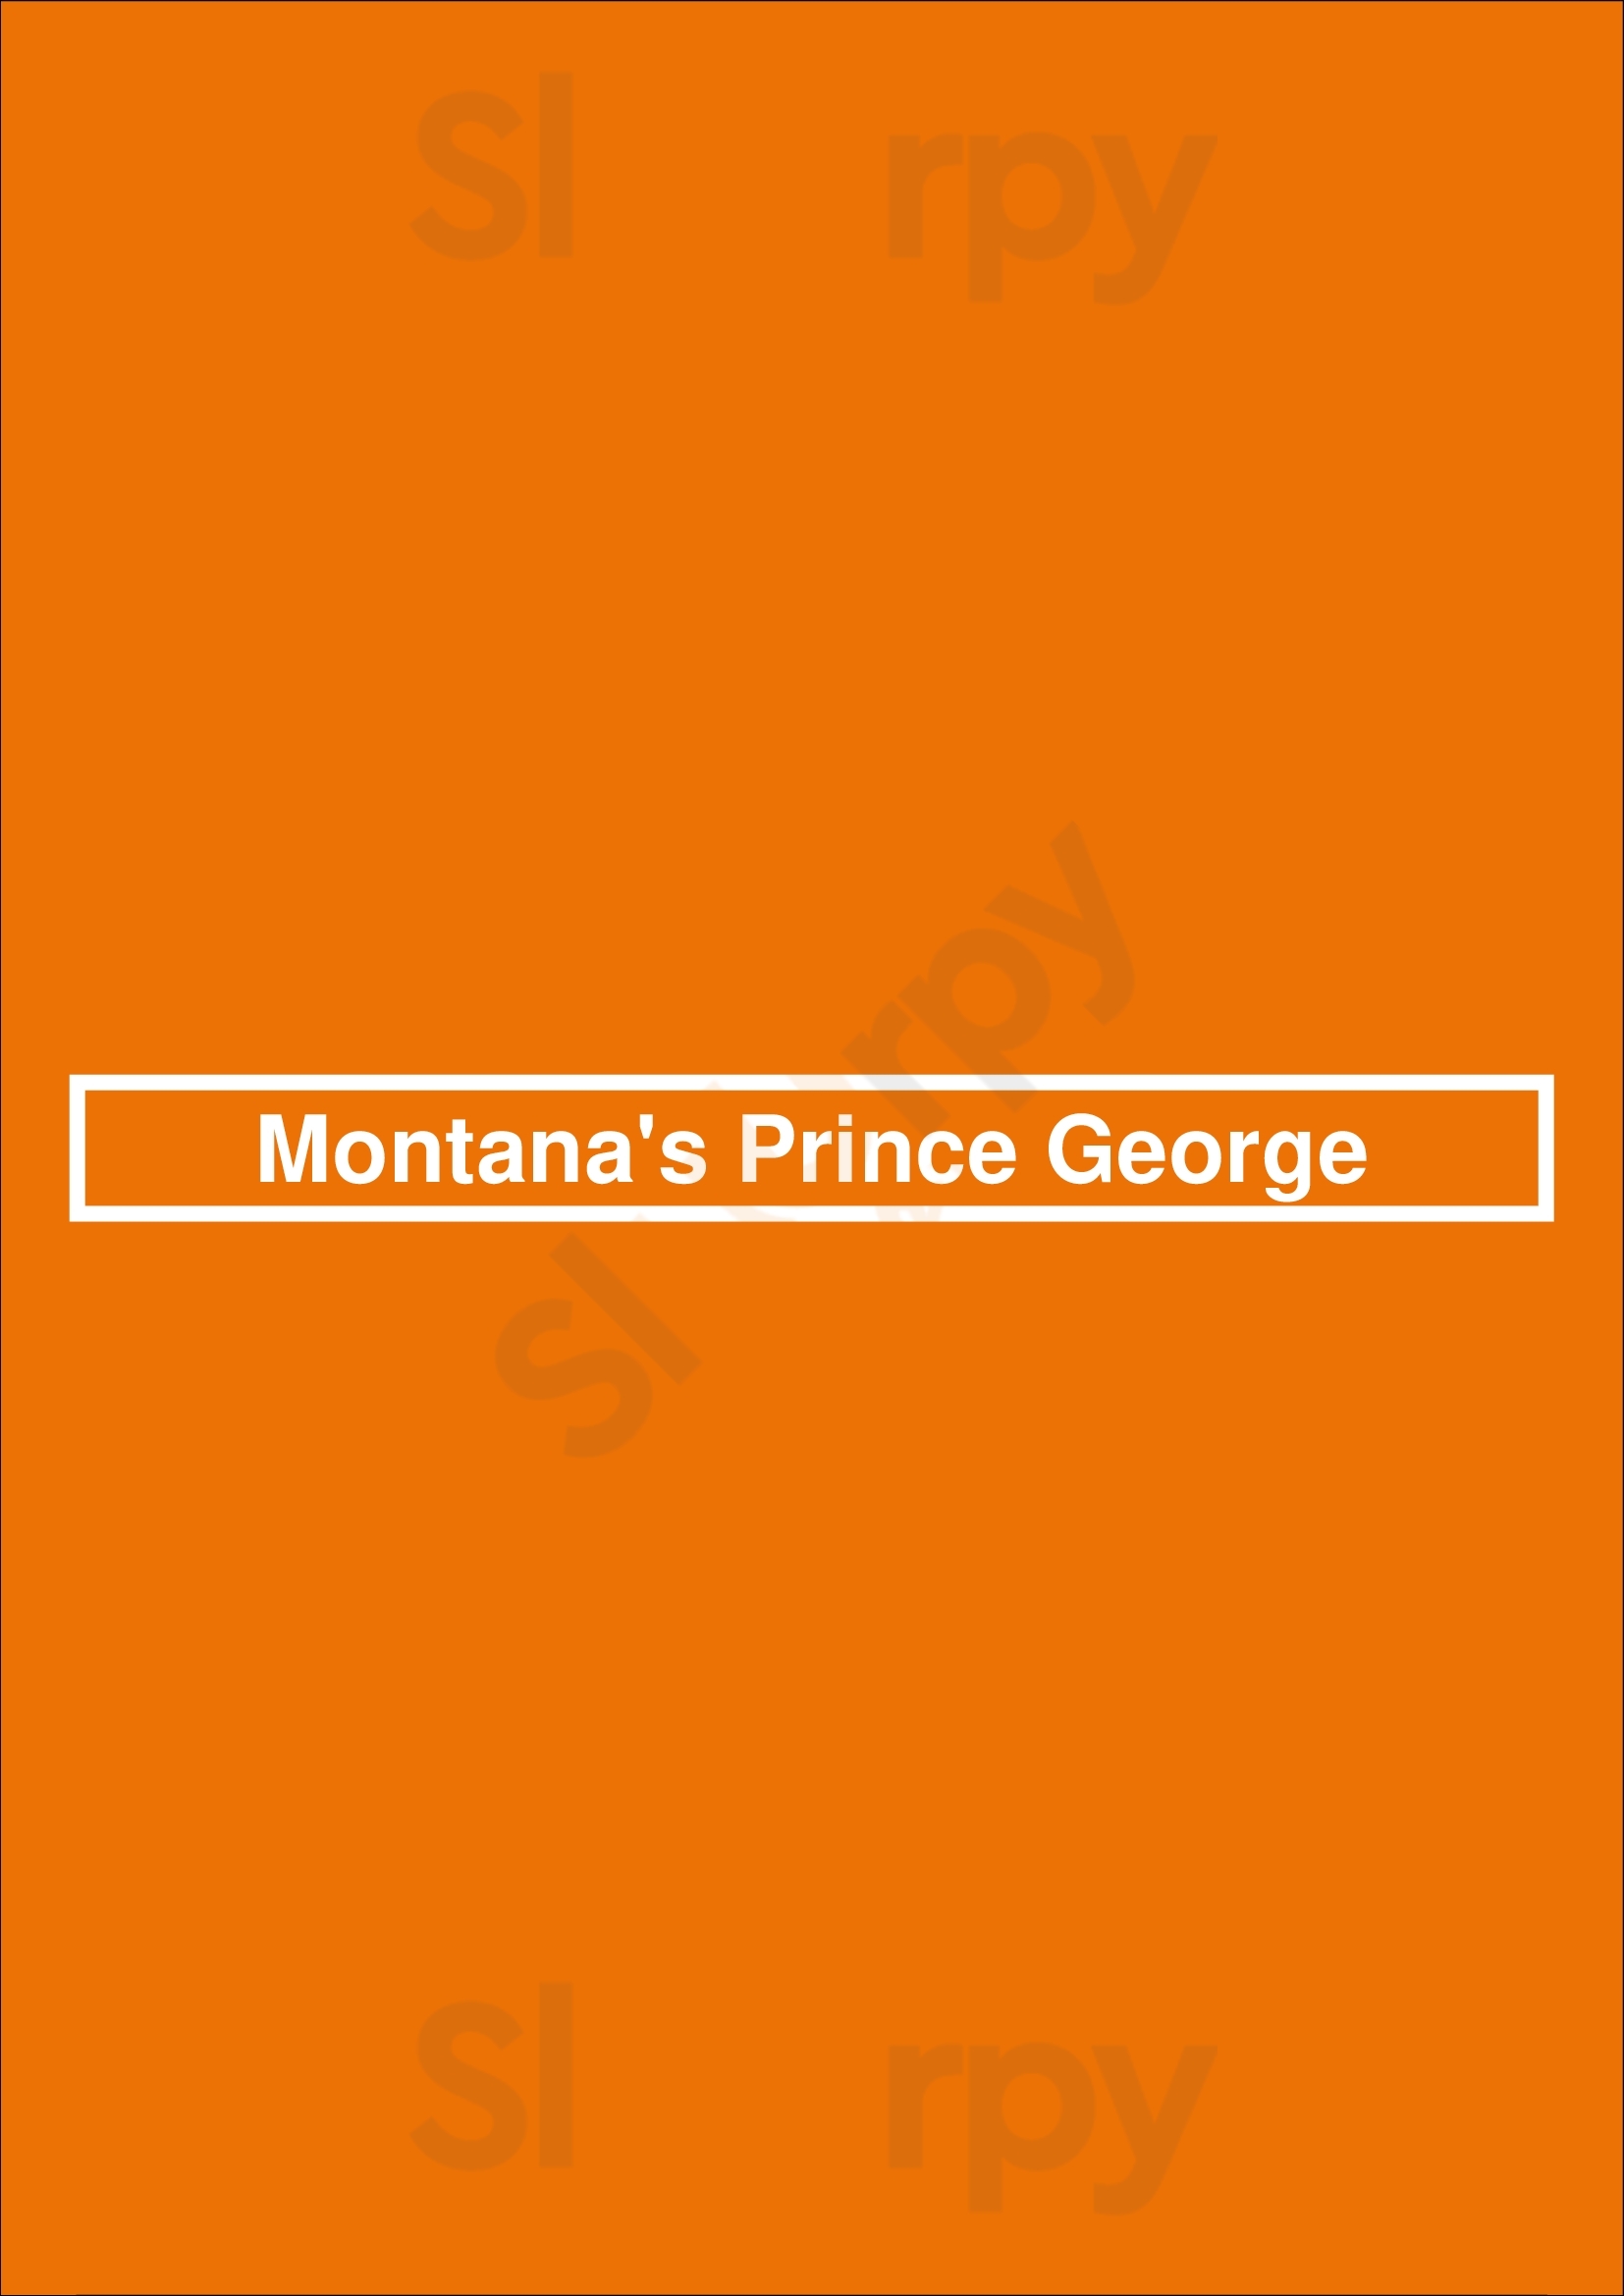 Montana's Prince George Menu - 1